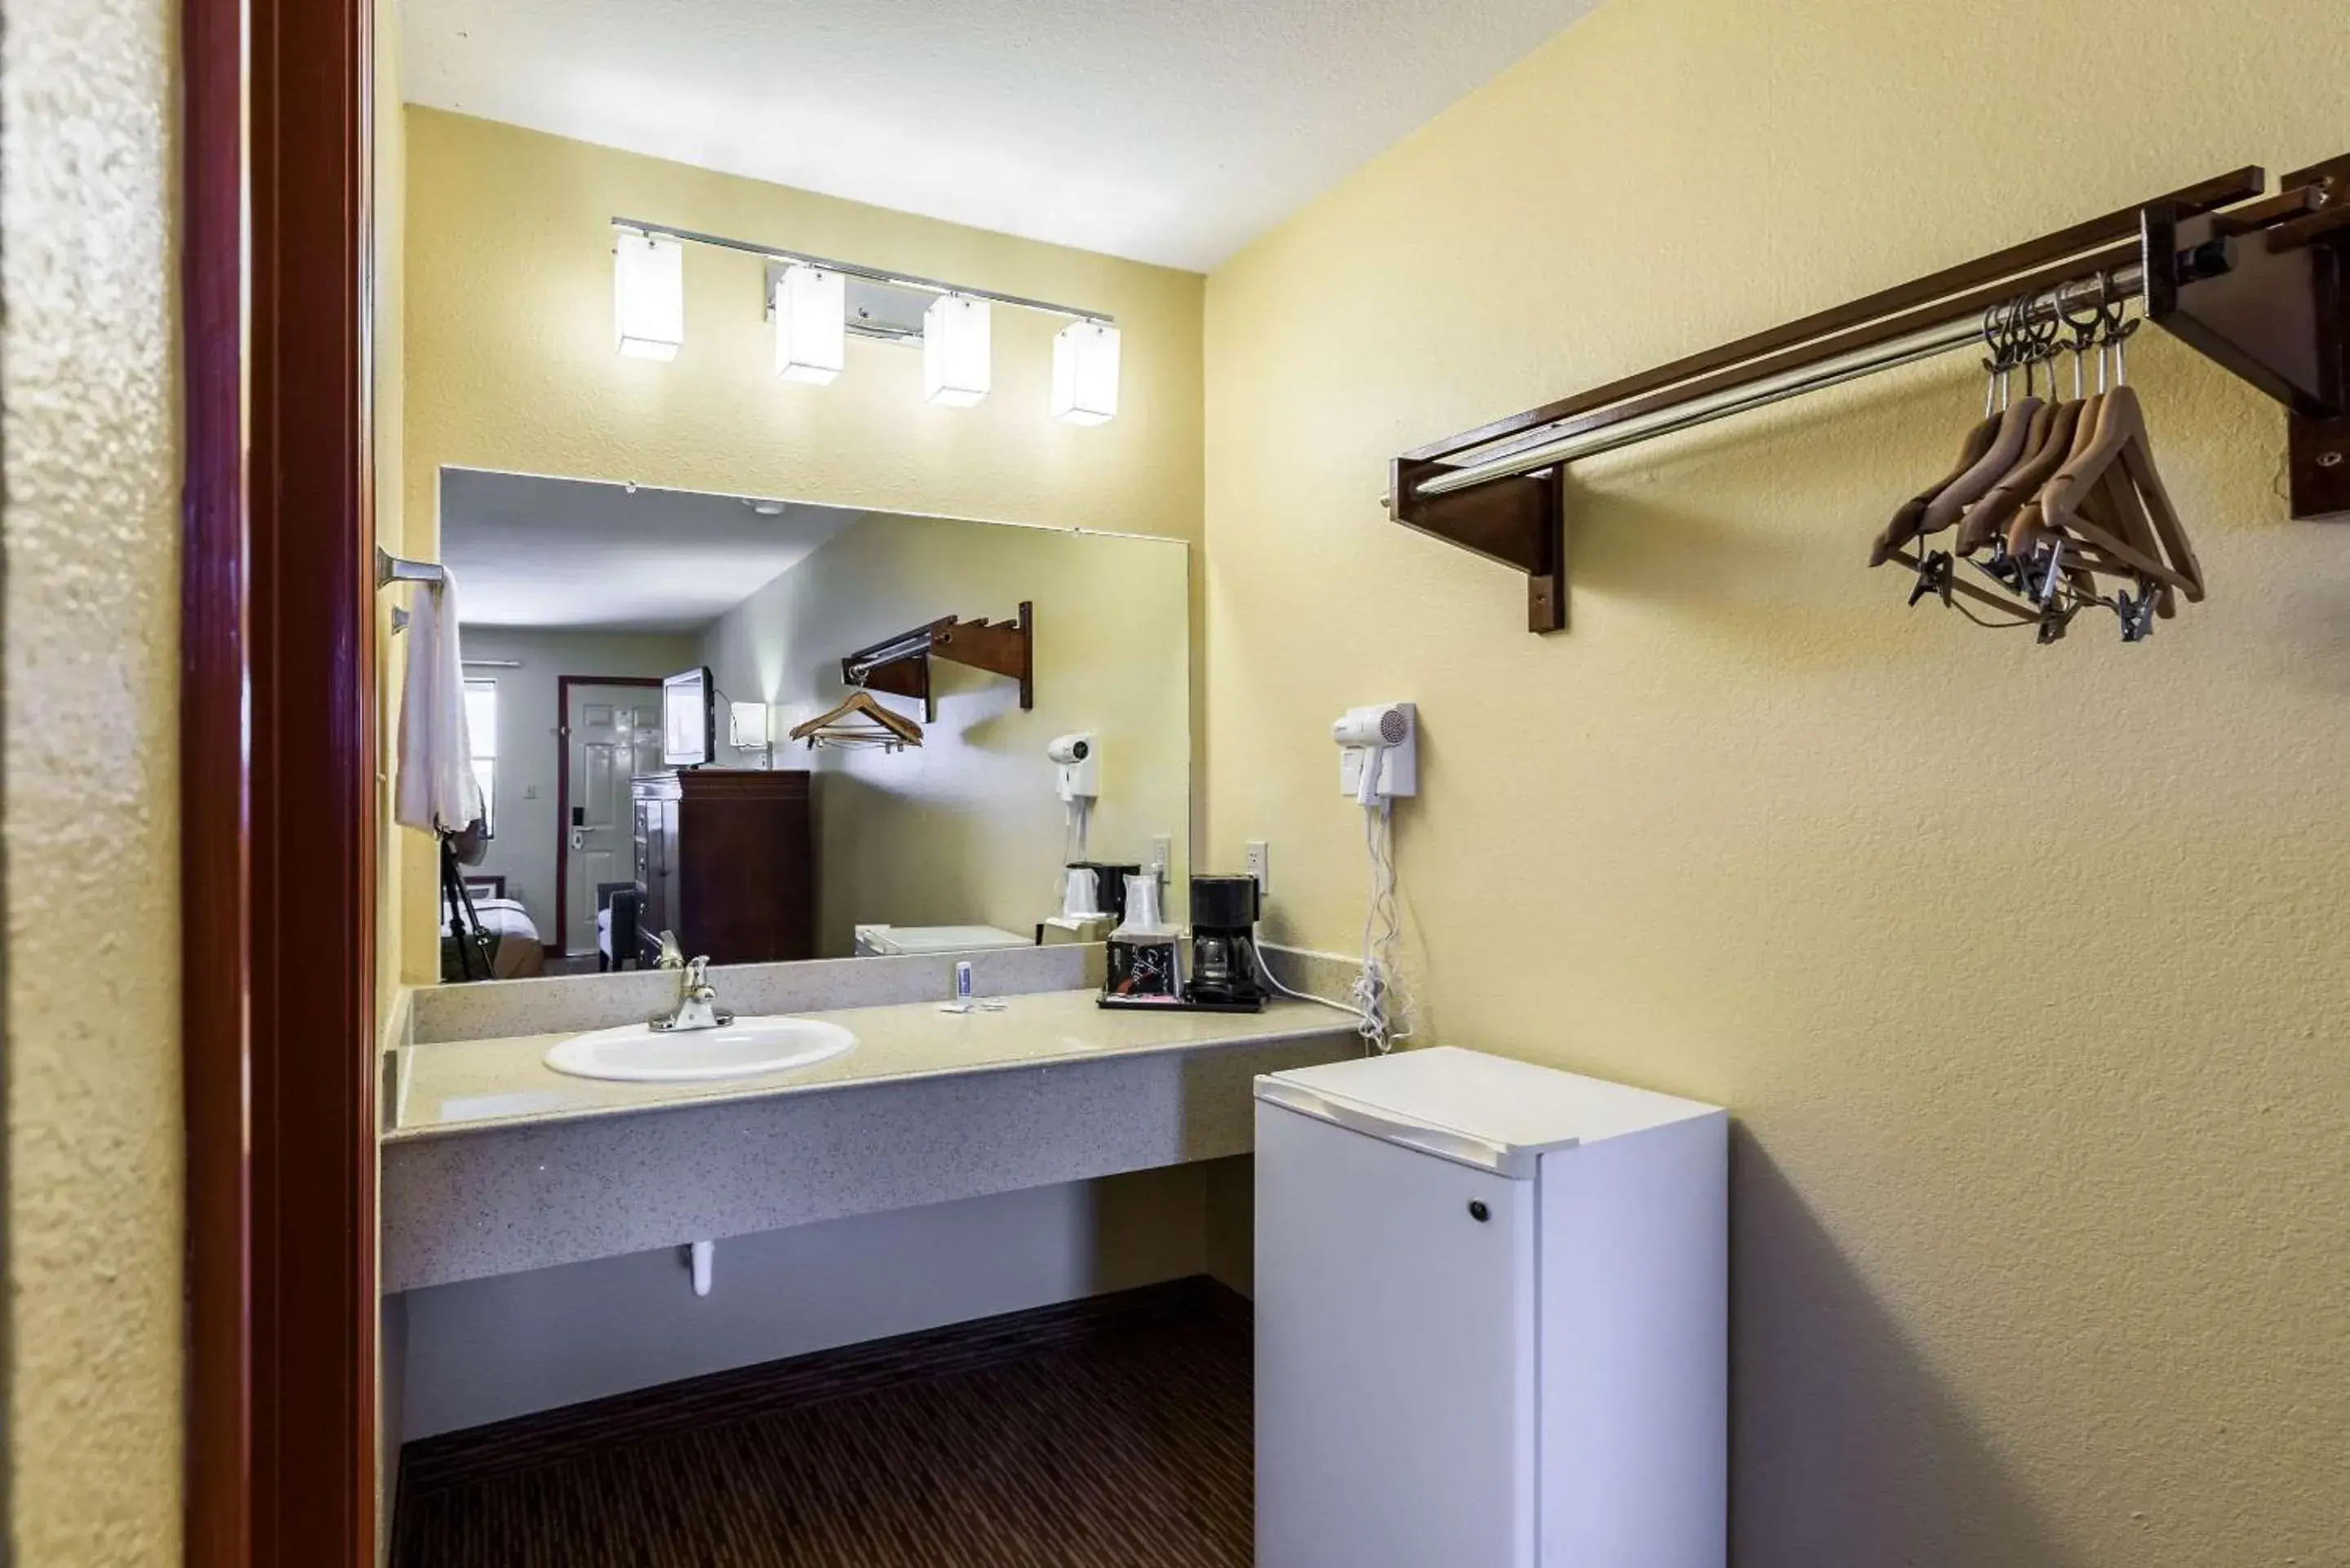 Photo of the whole room, Bathroom in Rodeway Inn - Galveston